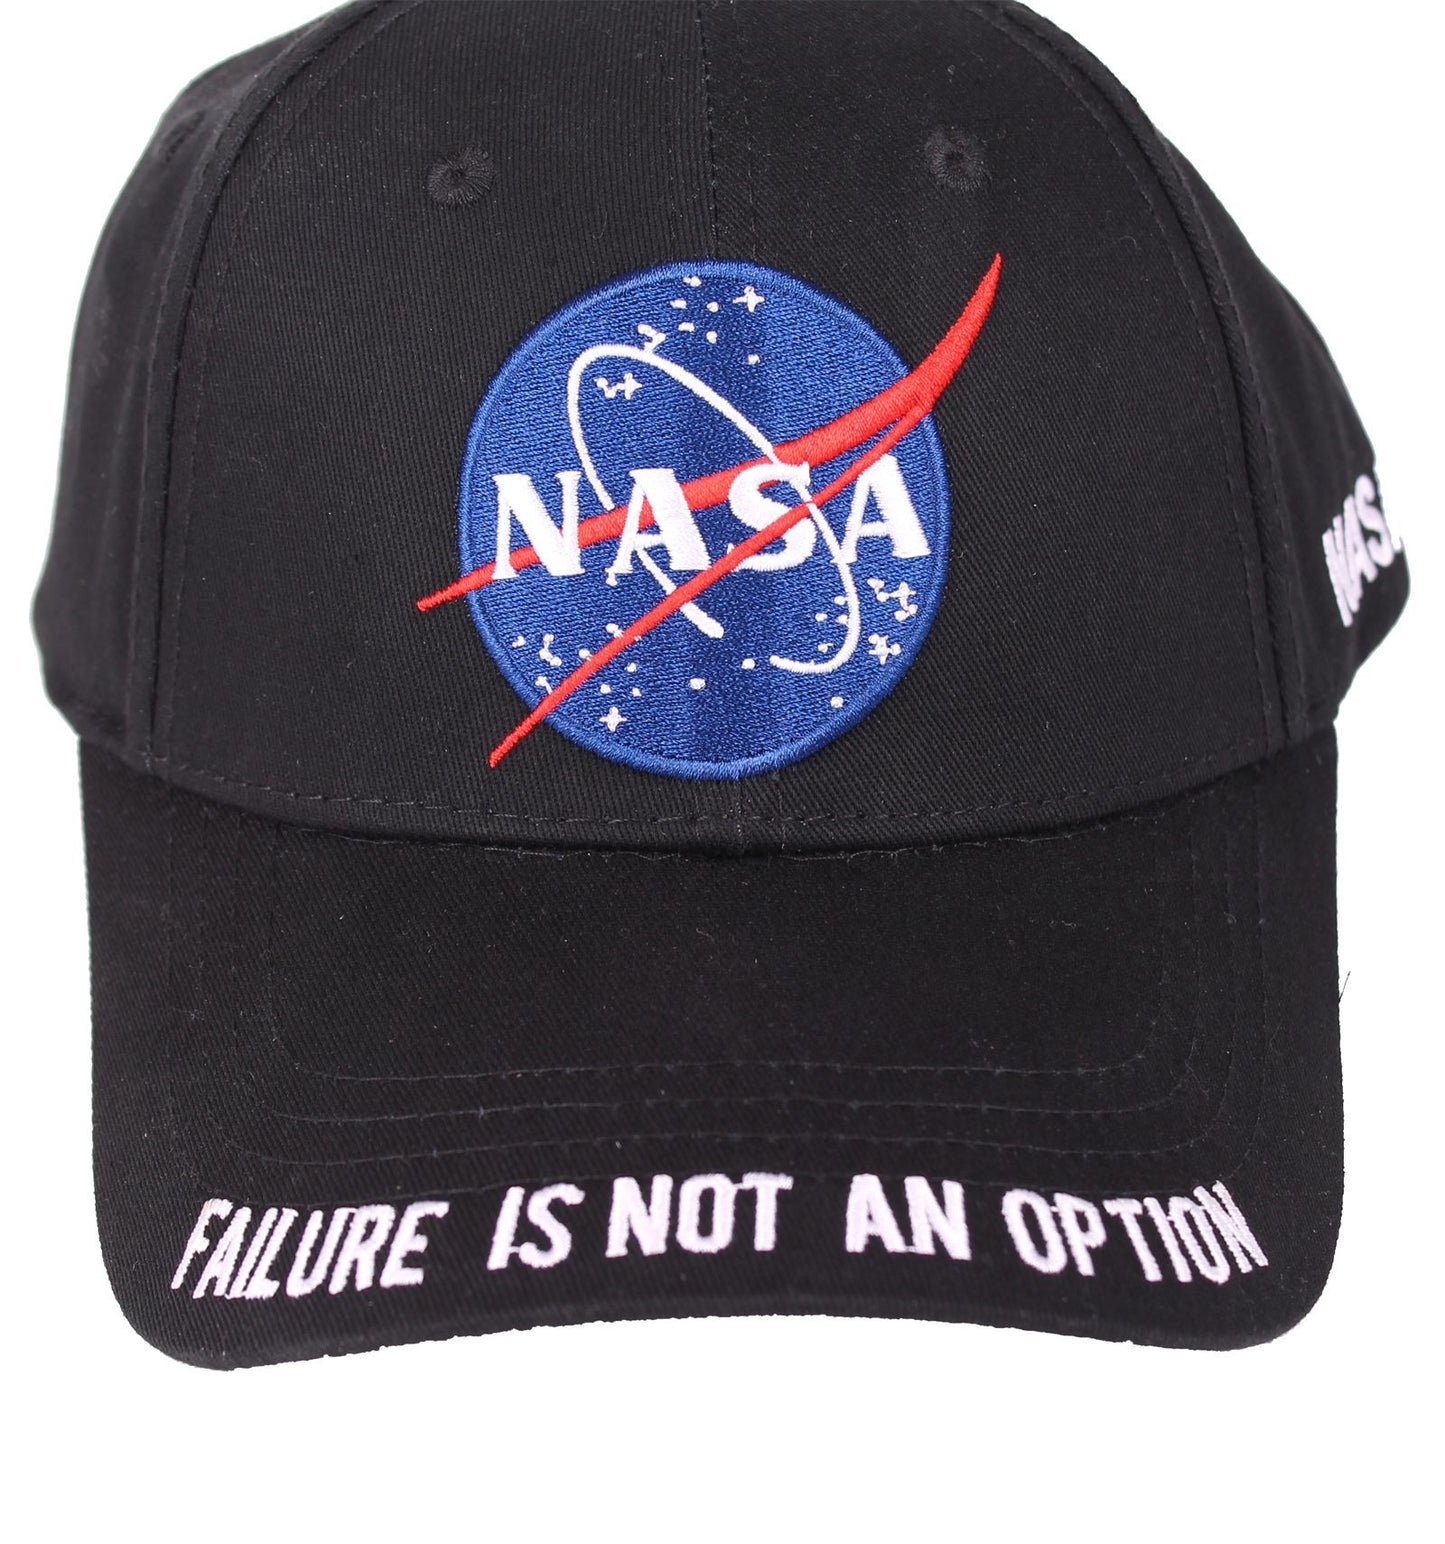 NASA Cap - Failure Is Not An Option